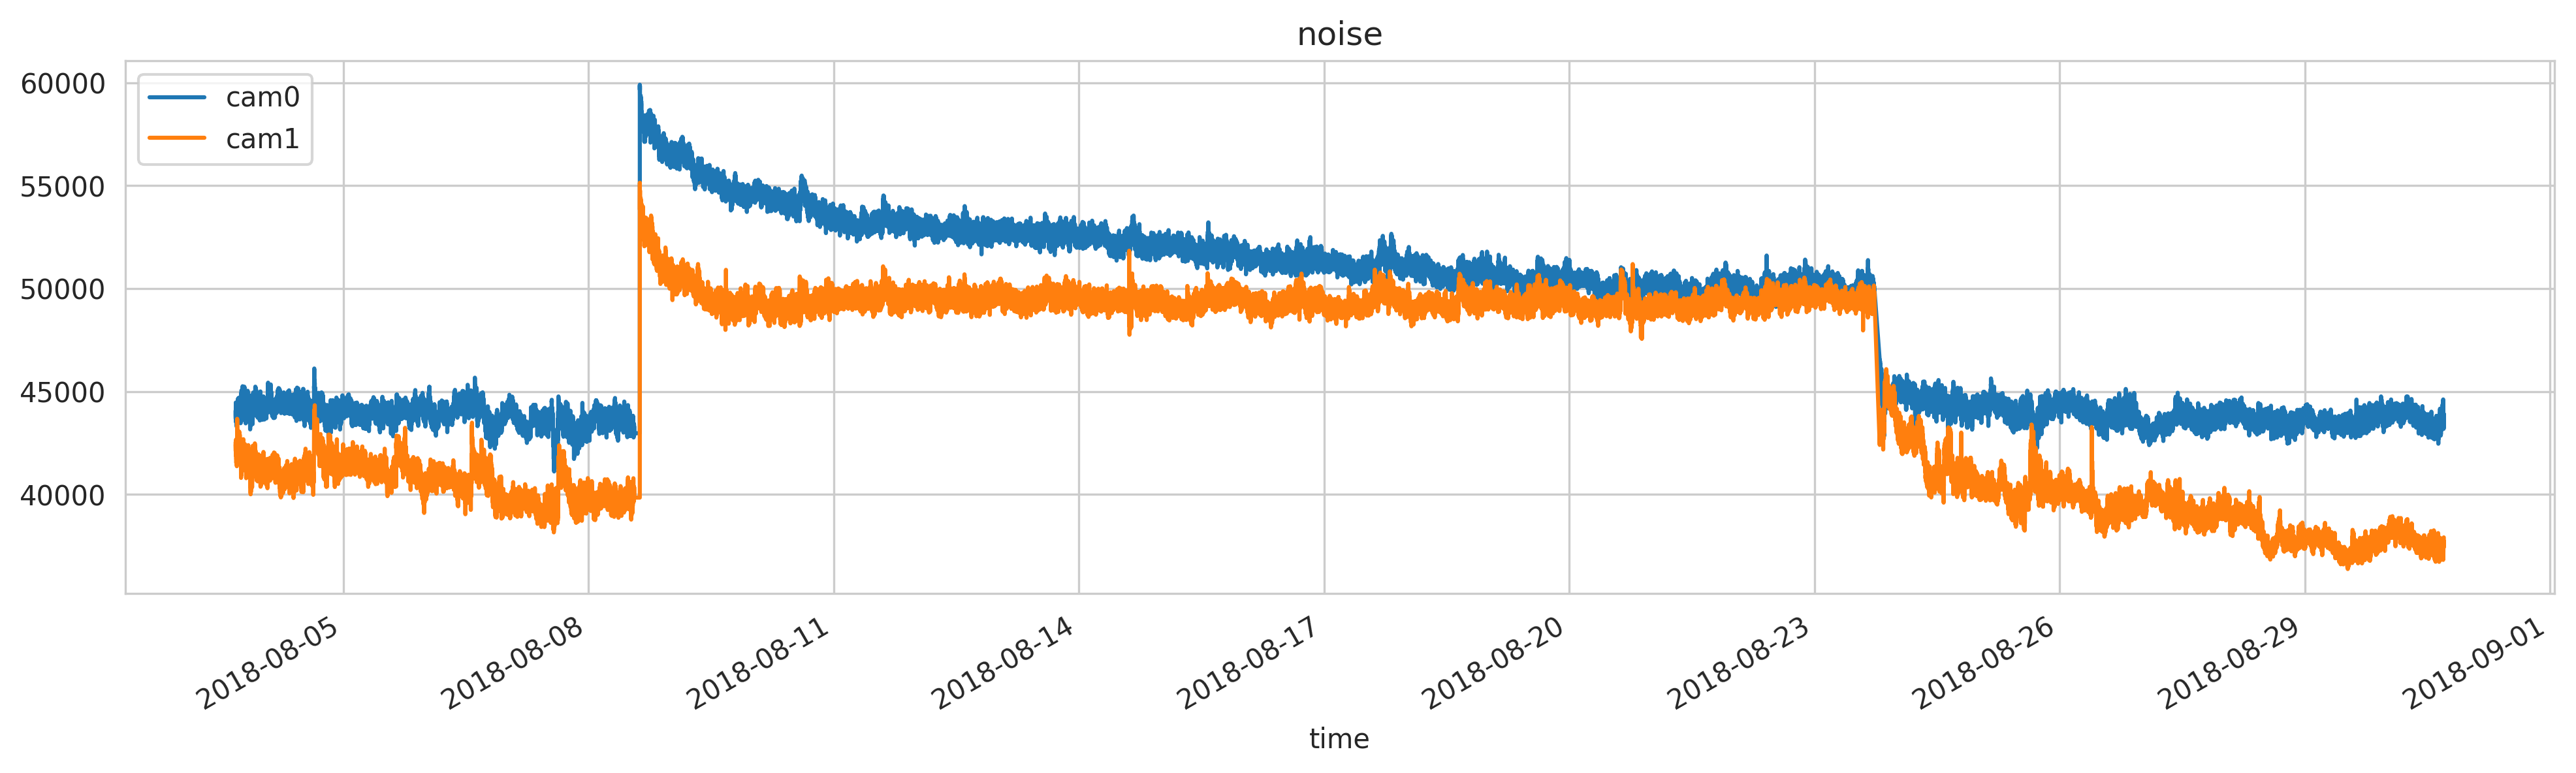 noise_metrics live preview